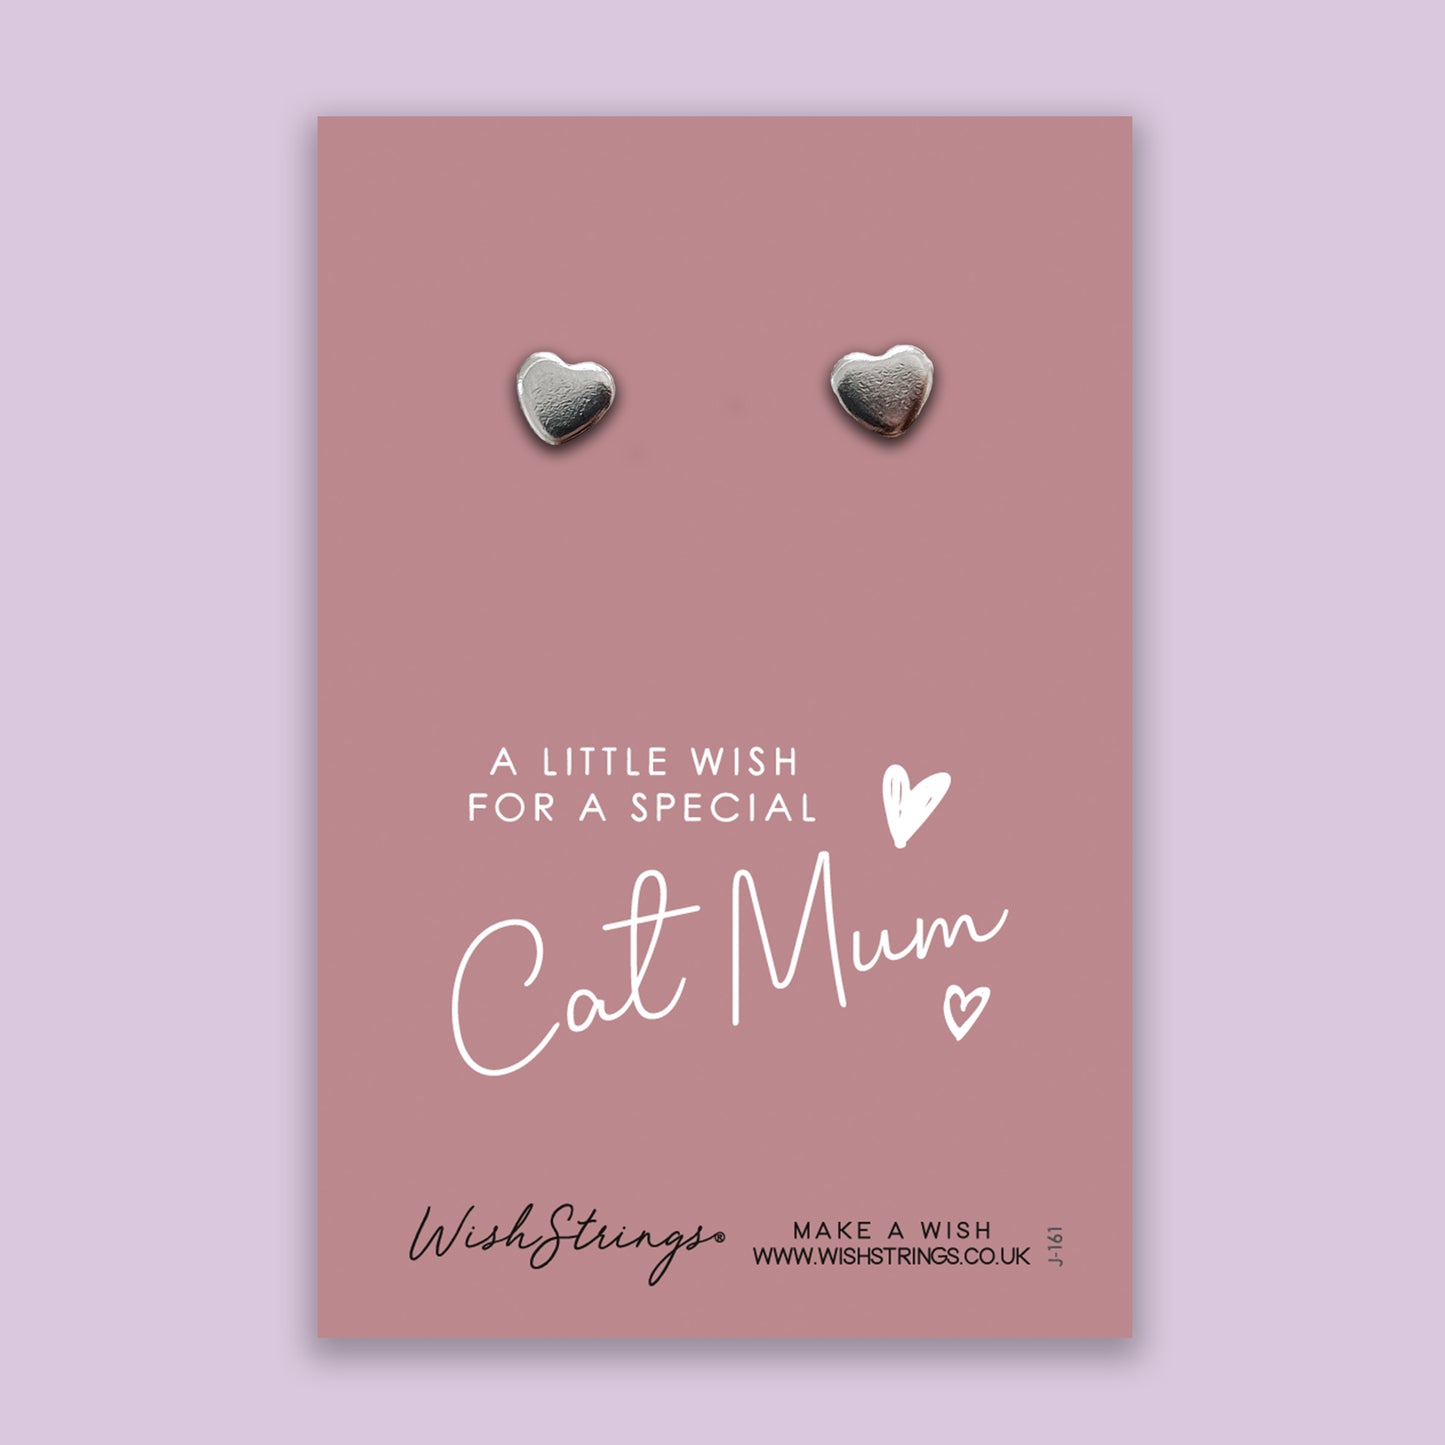 Cat Mum - Silver Heart Stud Earrings | 304 Stainless - Hypoallergenic